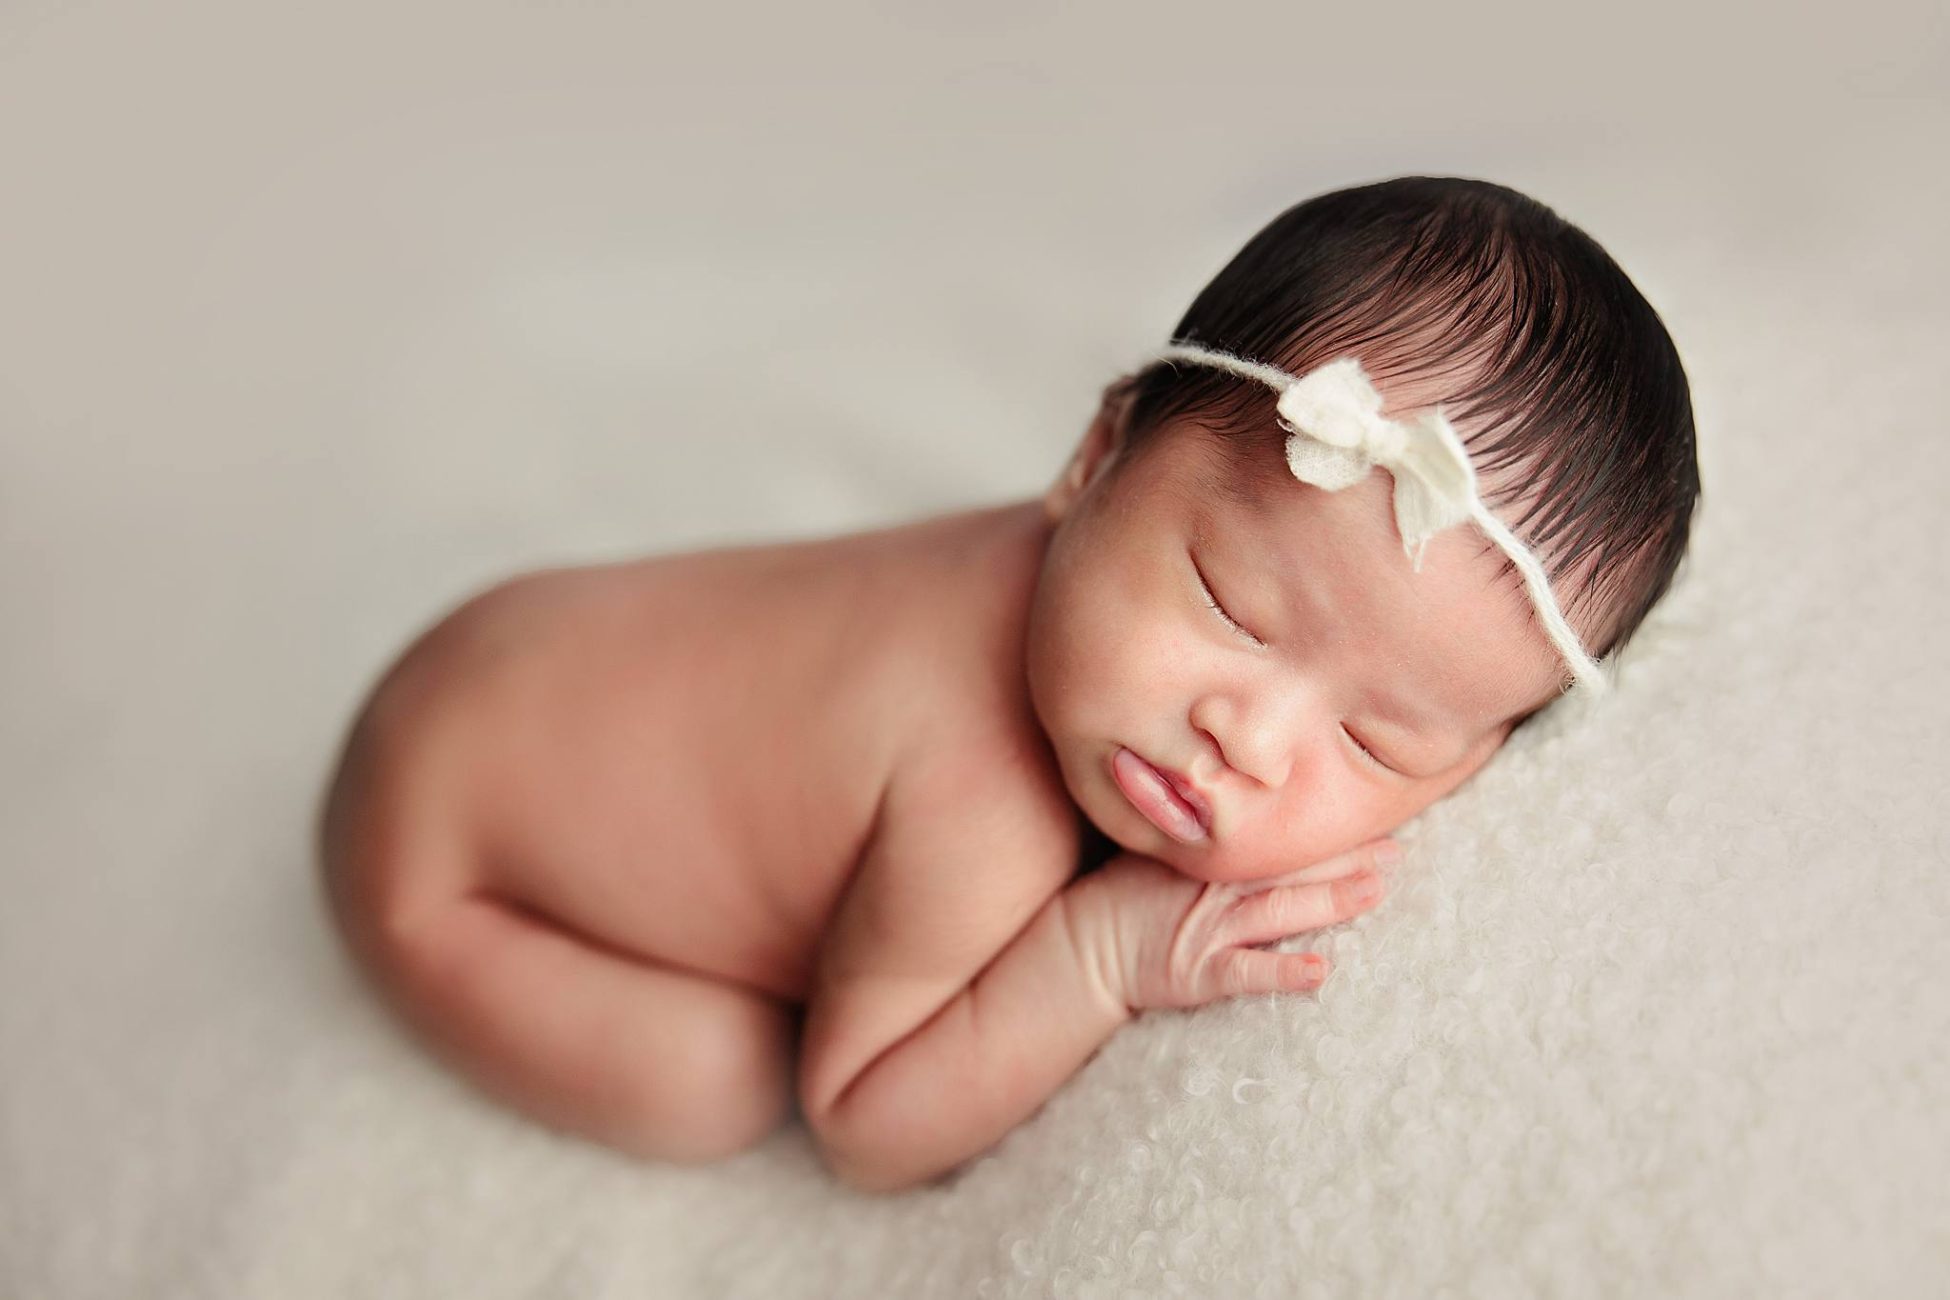 Litchfield Park Newborn Photographer - Baby Raleigh